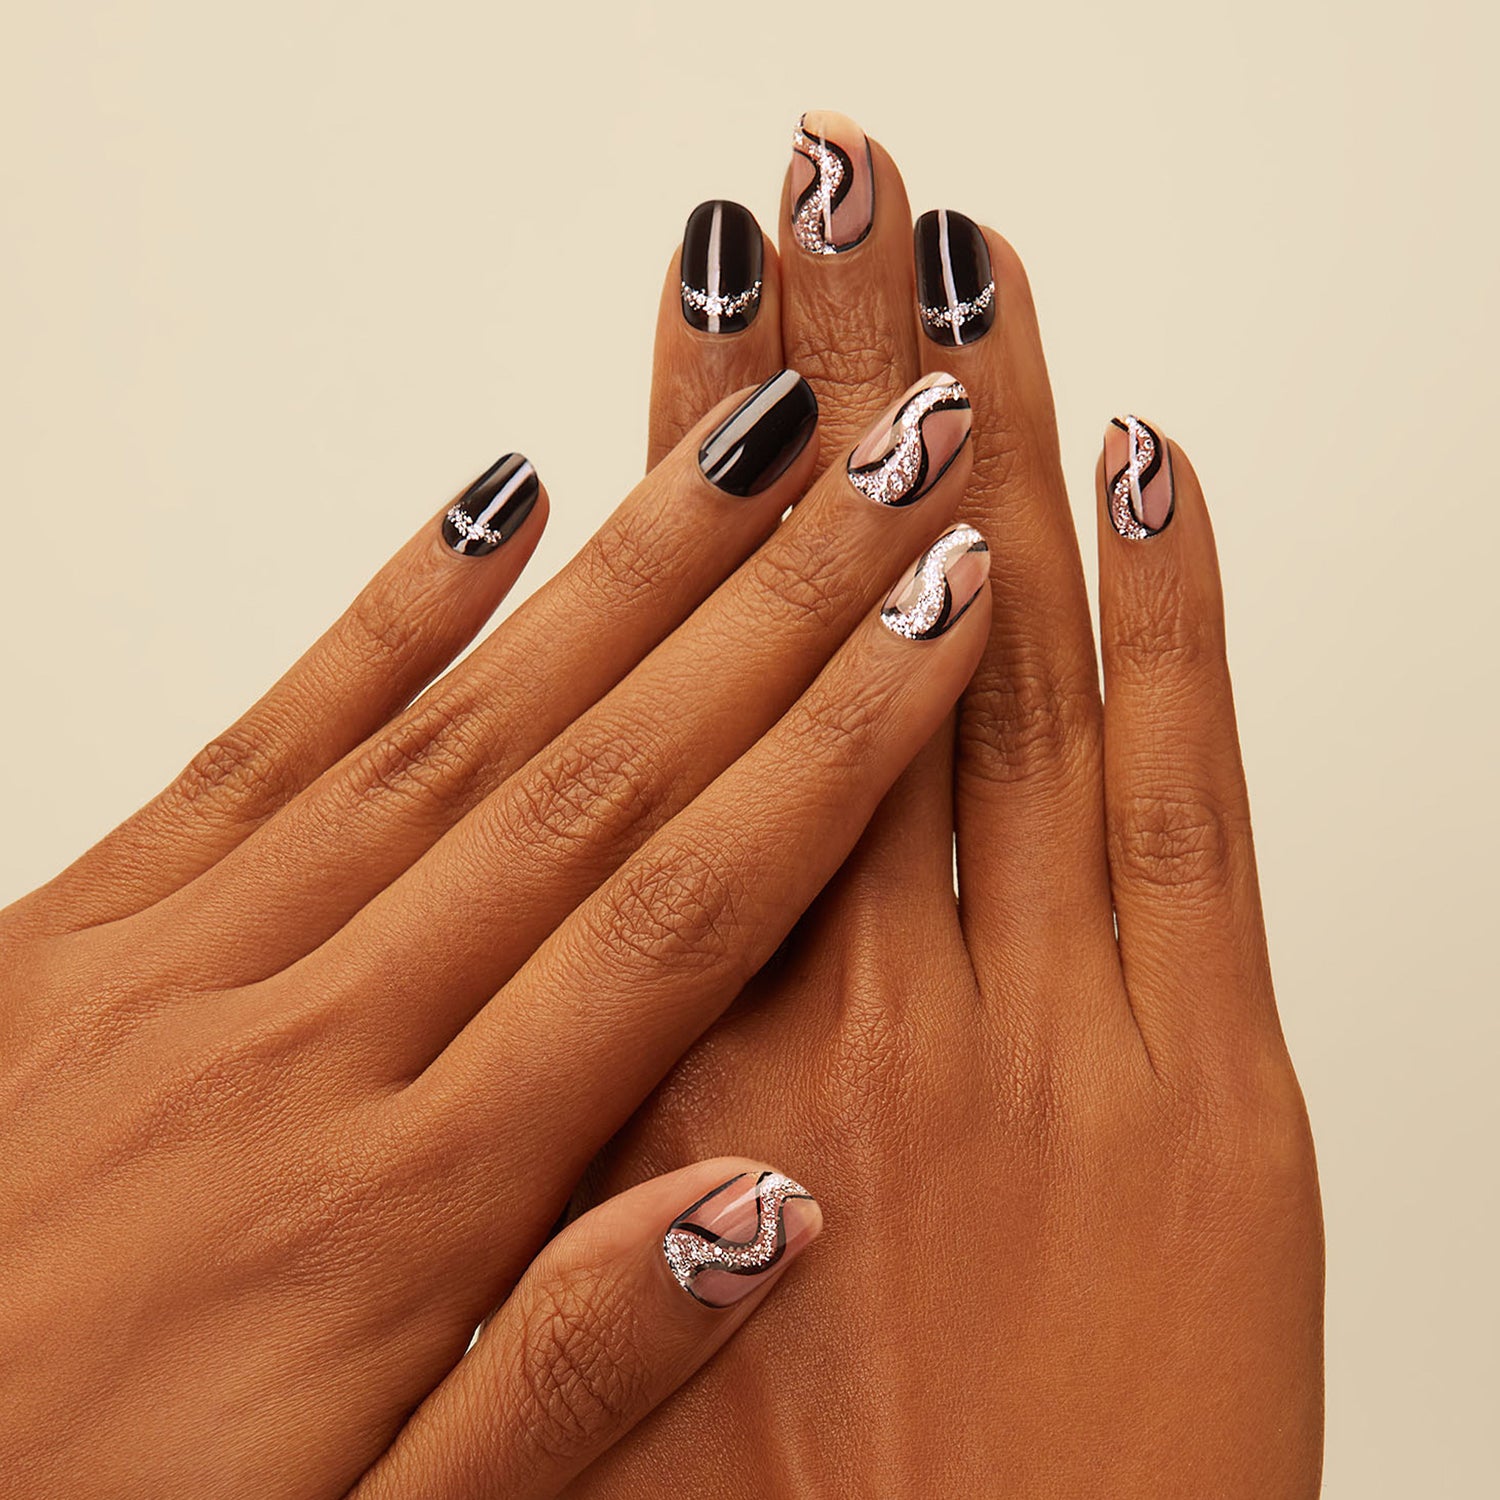 Stark black gel nail strips featuring silver glitter swirl accents 